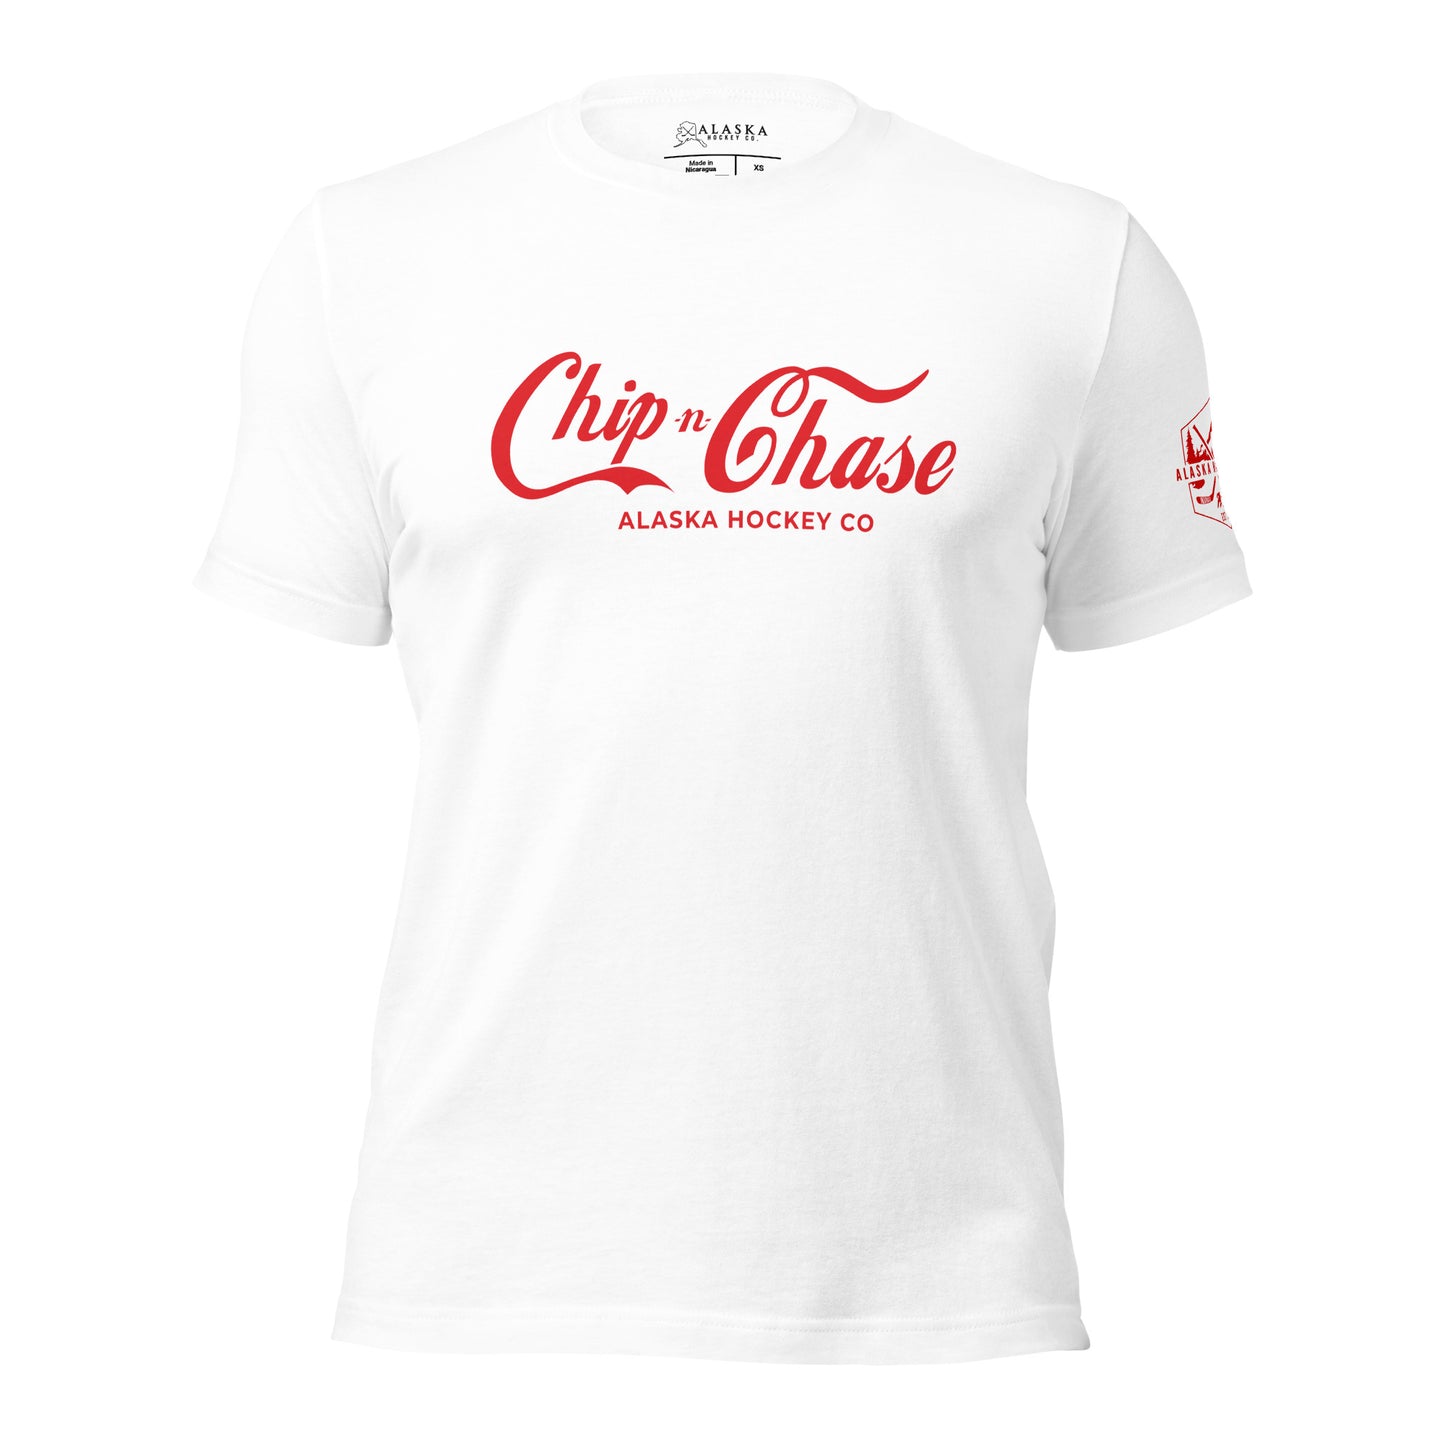 Chip-n-Chase Men's T-shirt